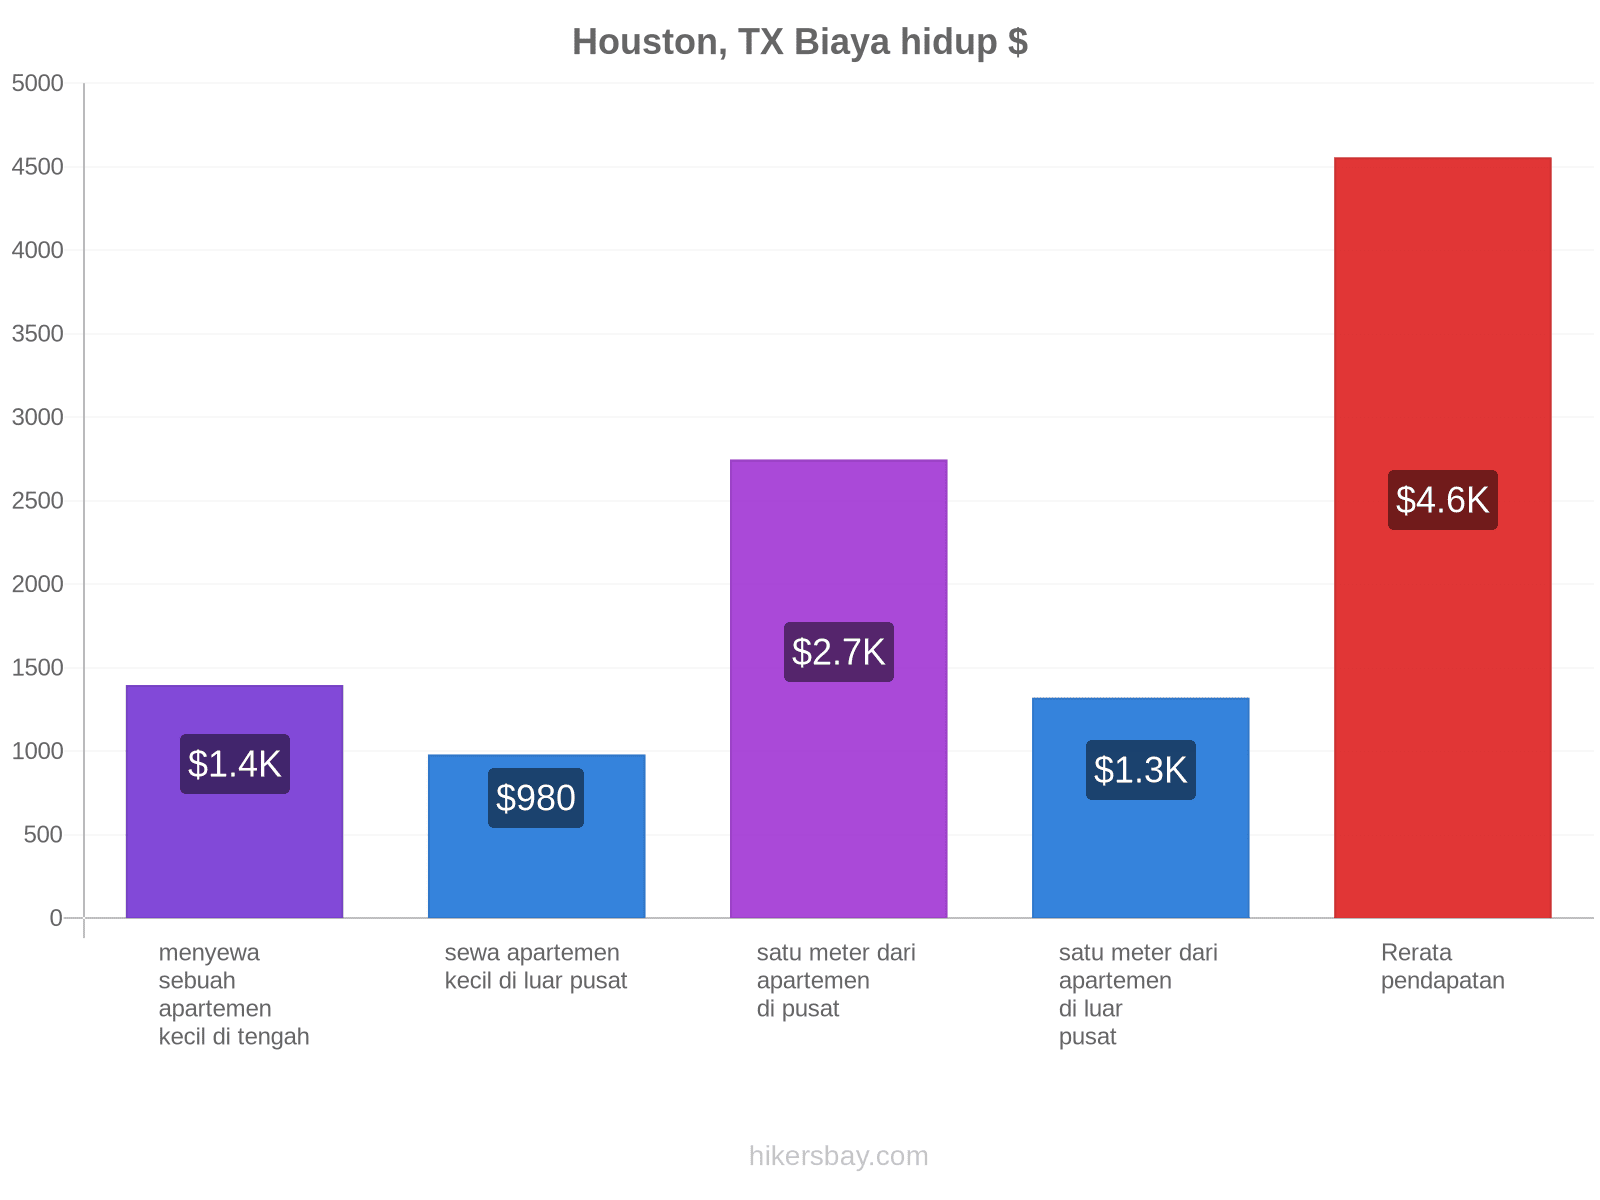 Houston, TX biaya hidup hikersbay.com